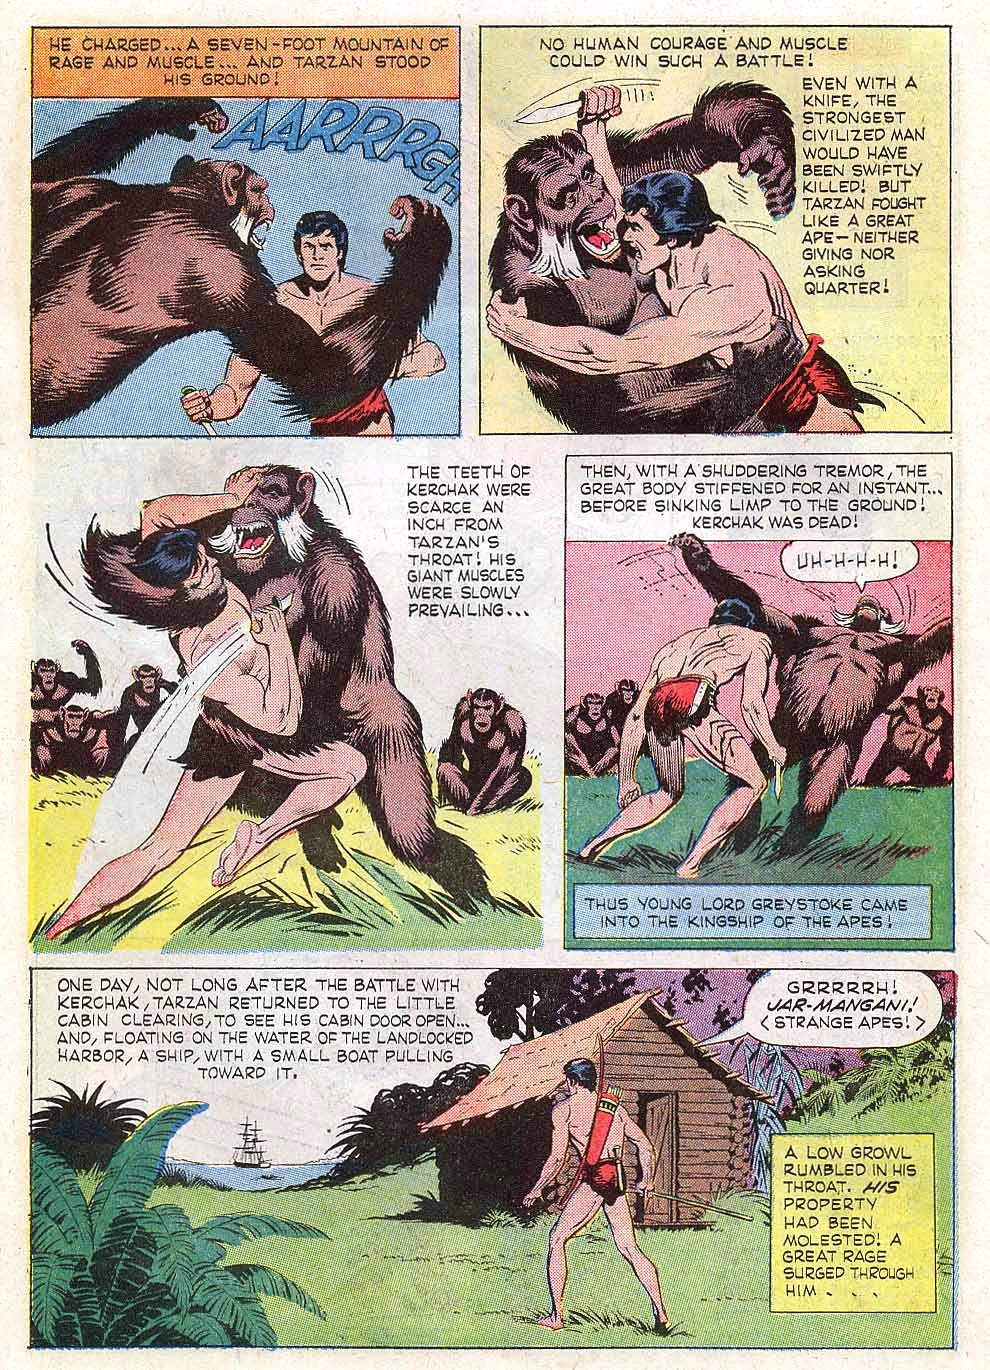 ERBzine 0080: Even Apes Fight For It